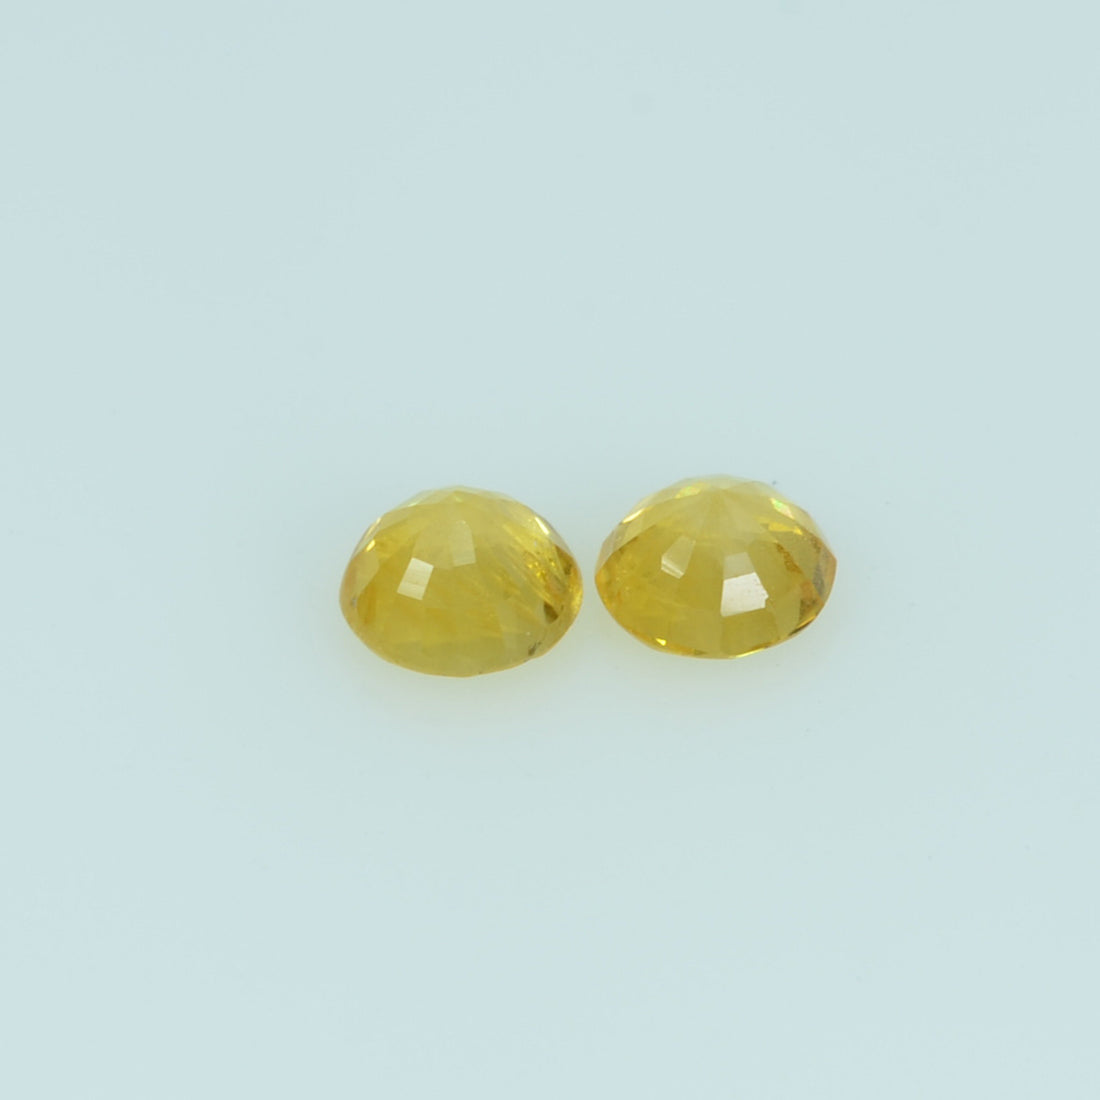 3.3 mm Natural Yellow Sapphire Loose Gemstone Round Cut - Thai Gems Export Ltd.